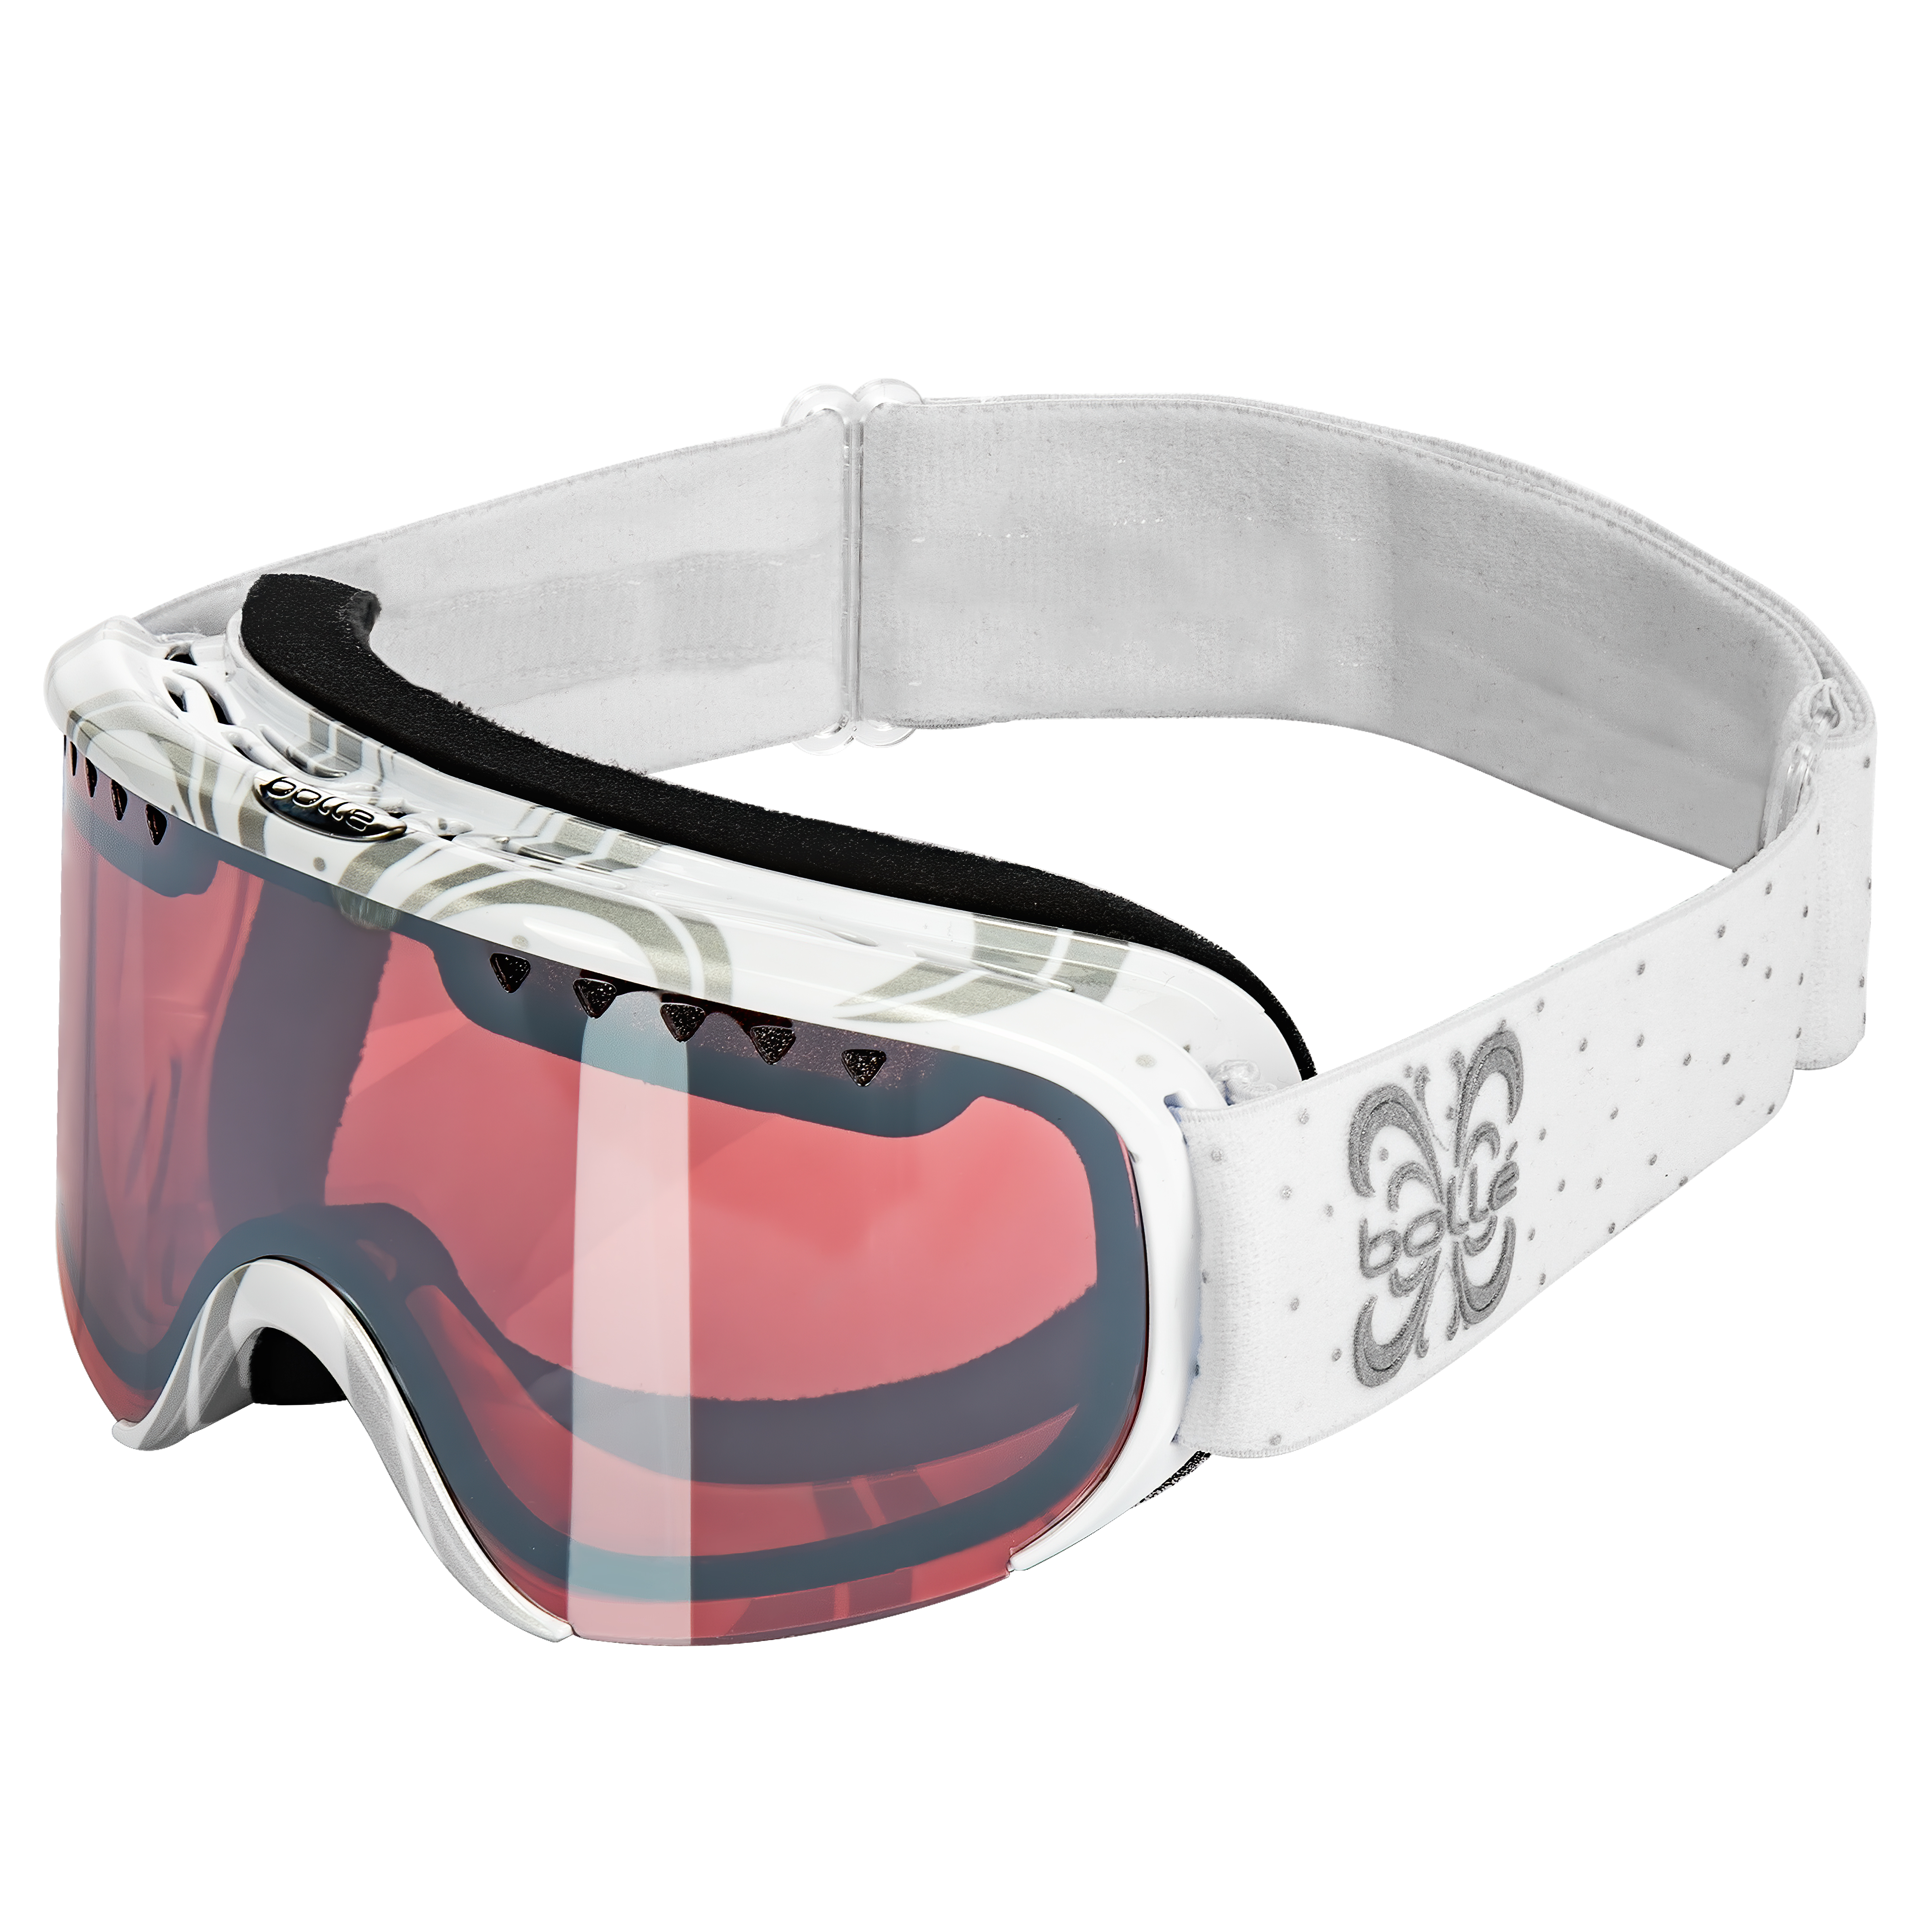 Цена лыжная маска с уф защитой Bolle Scarlett Shiny White Night Vermillon Gun в Киеве